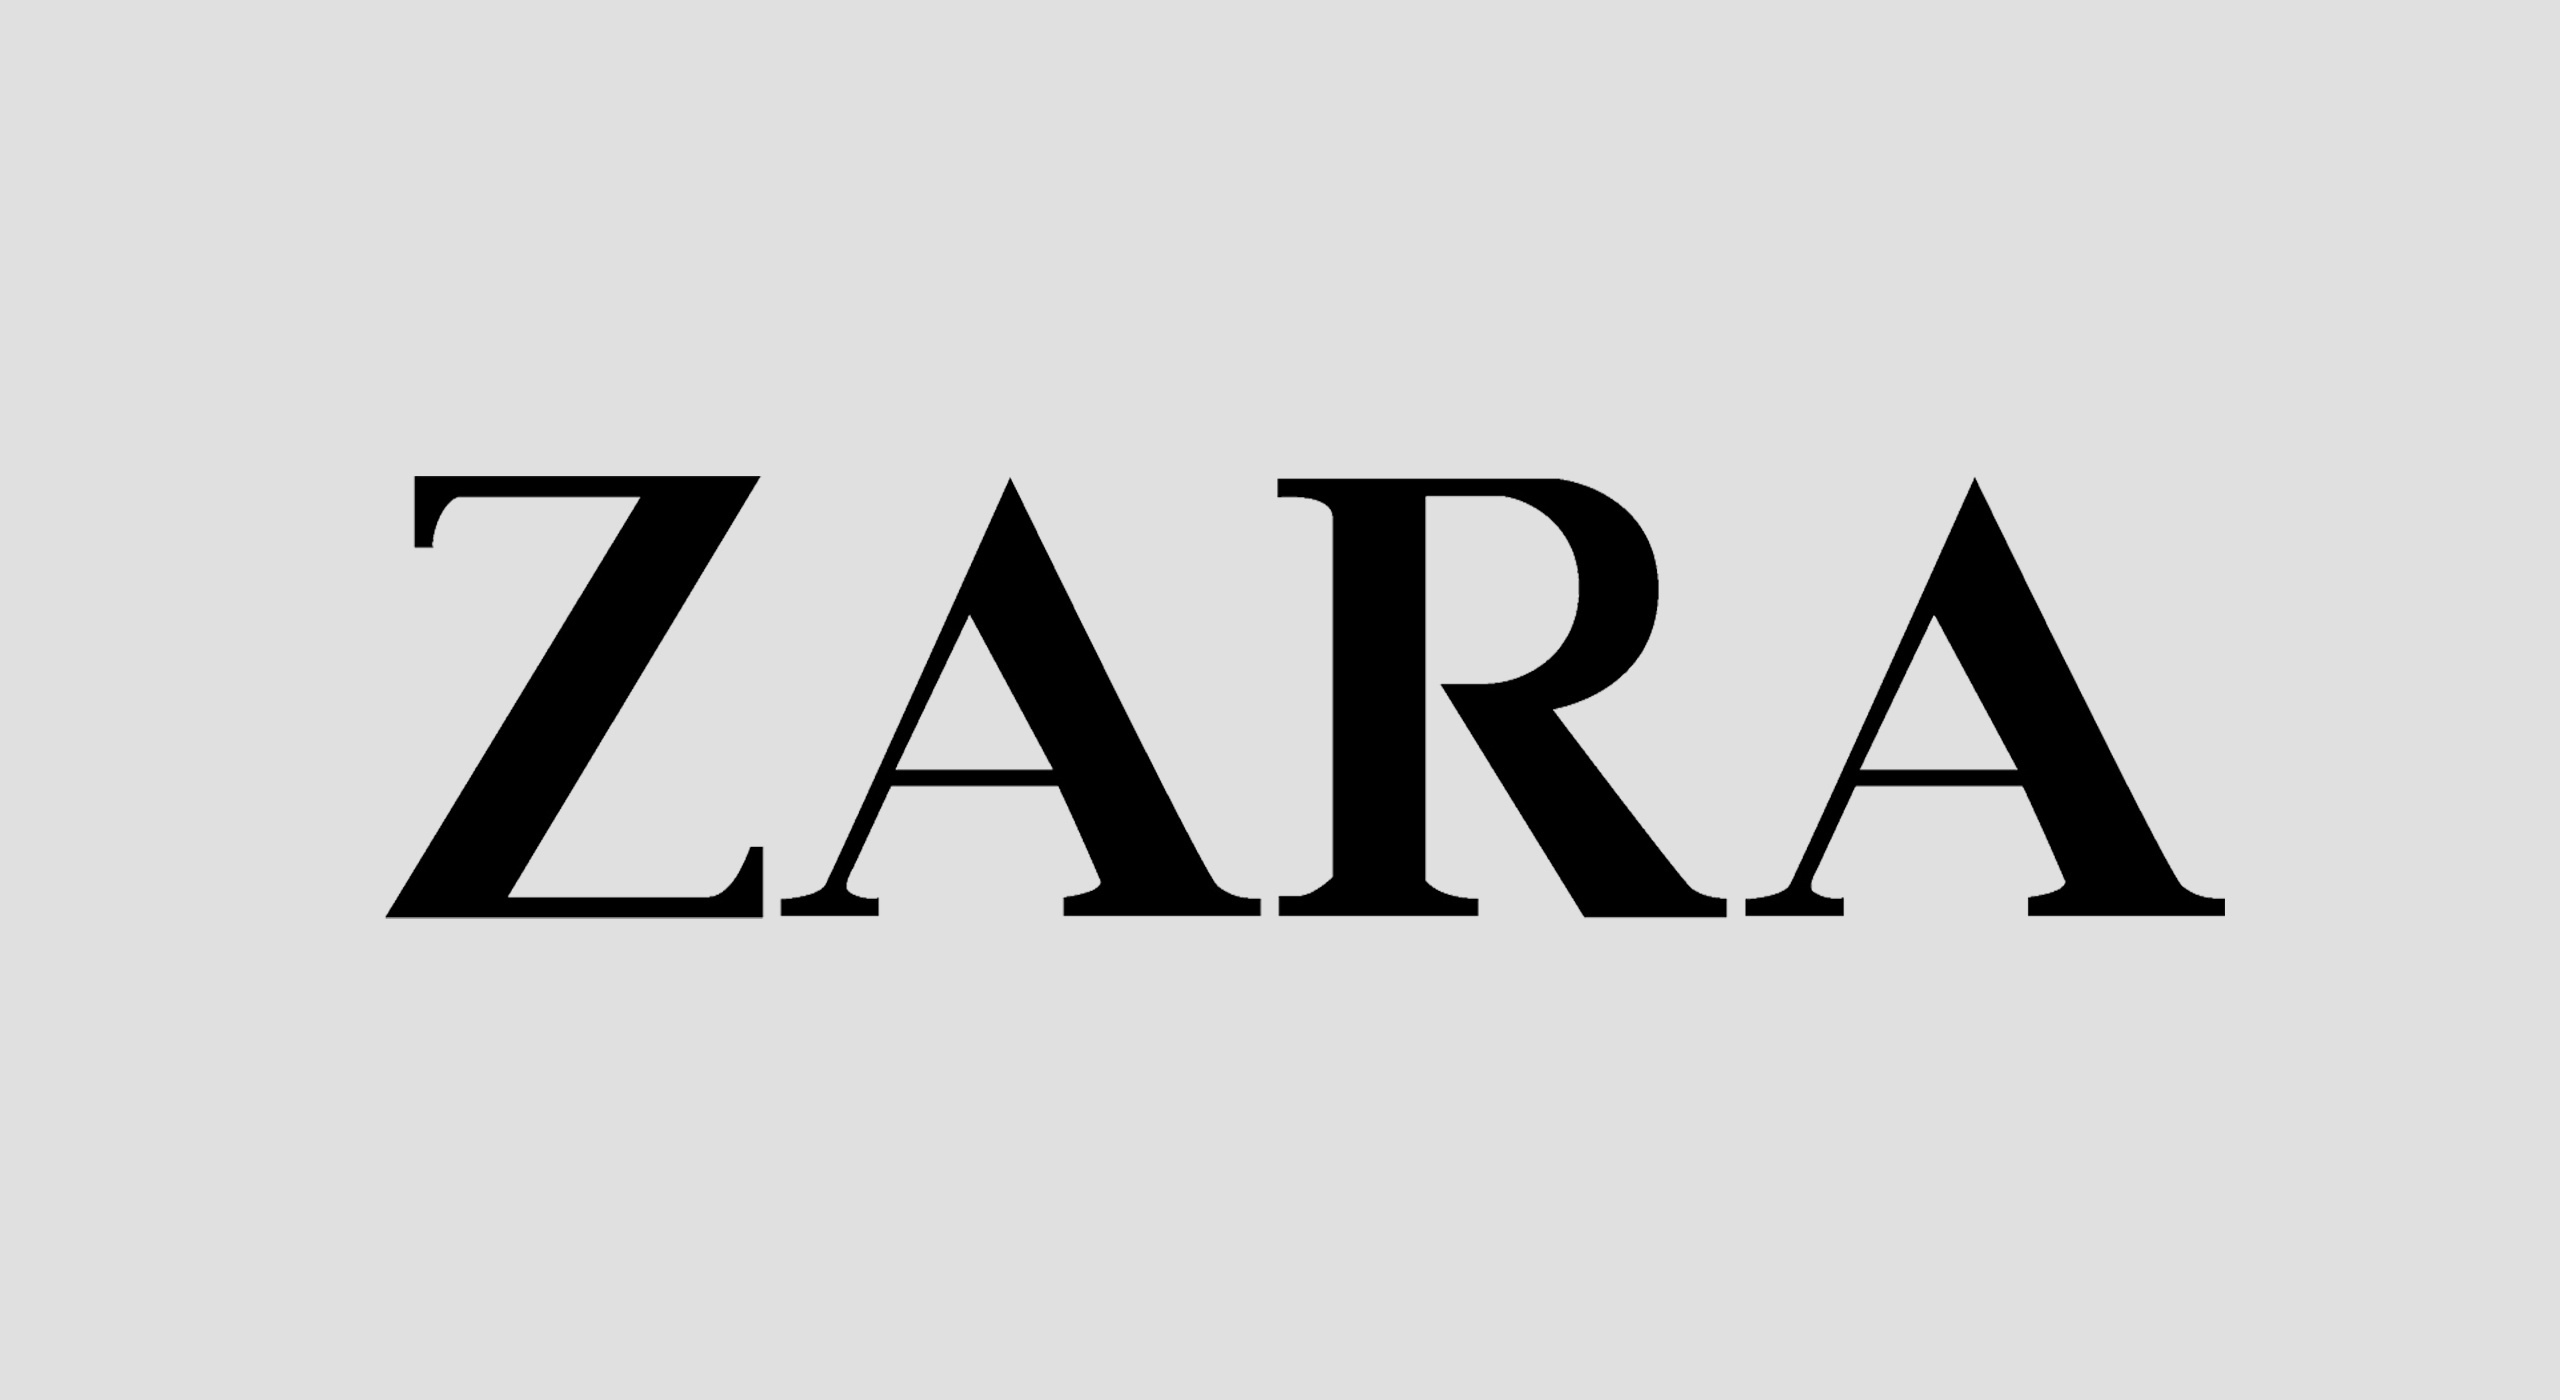 zara is a brand of